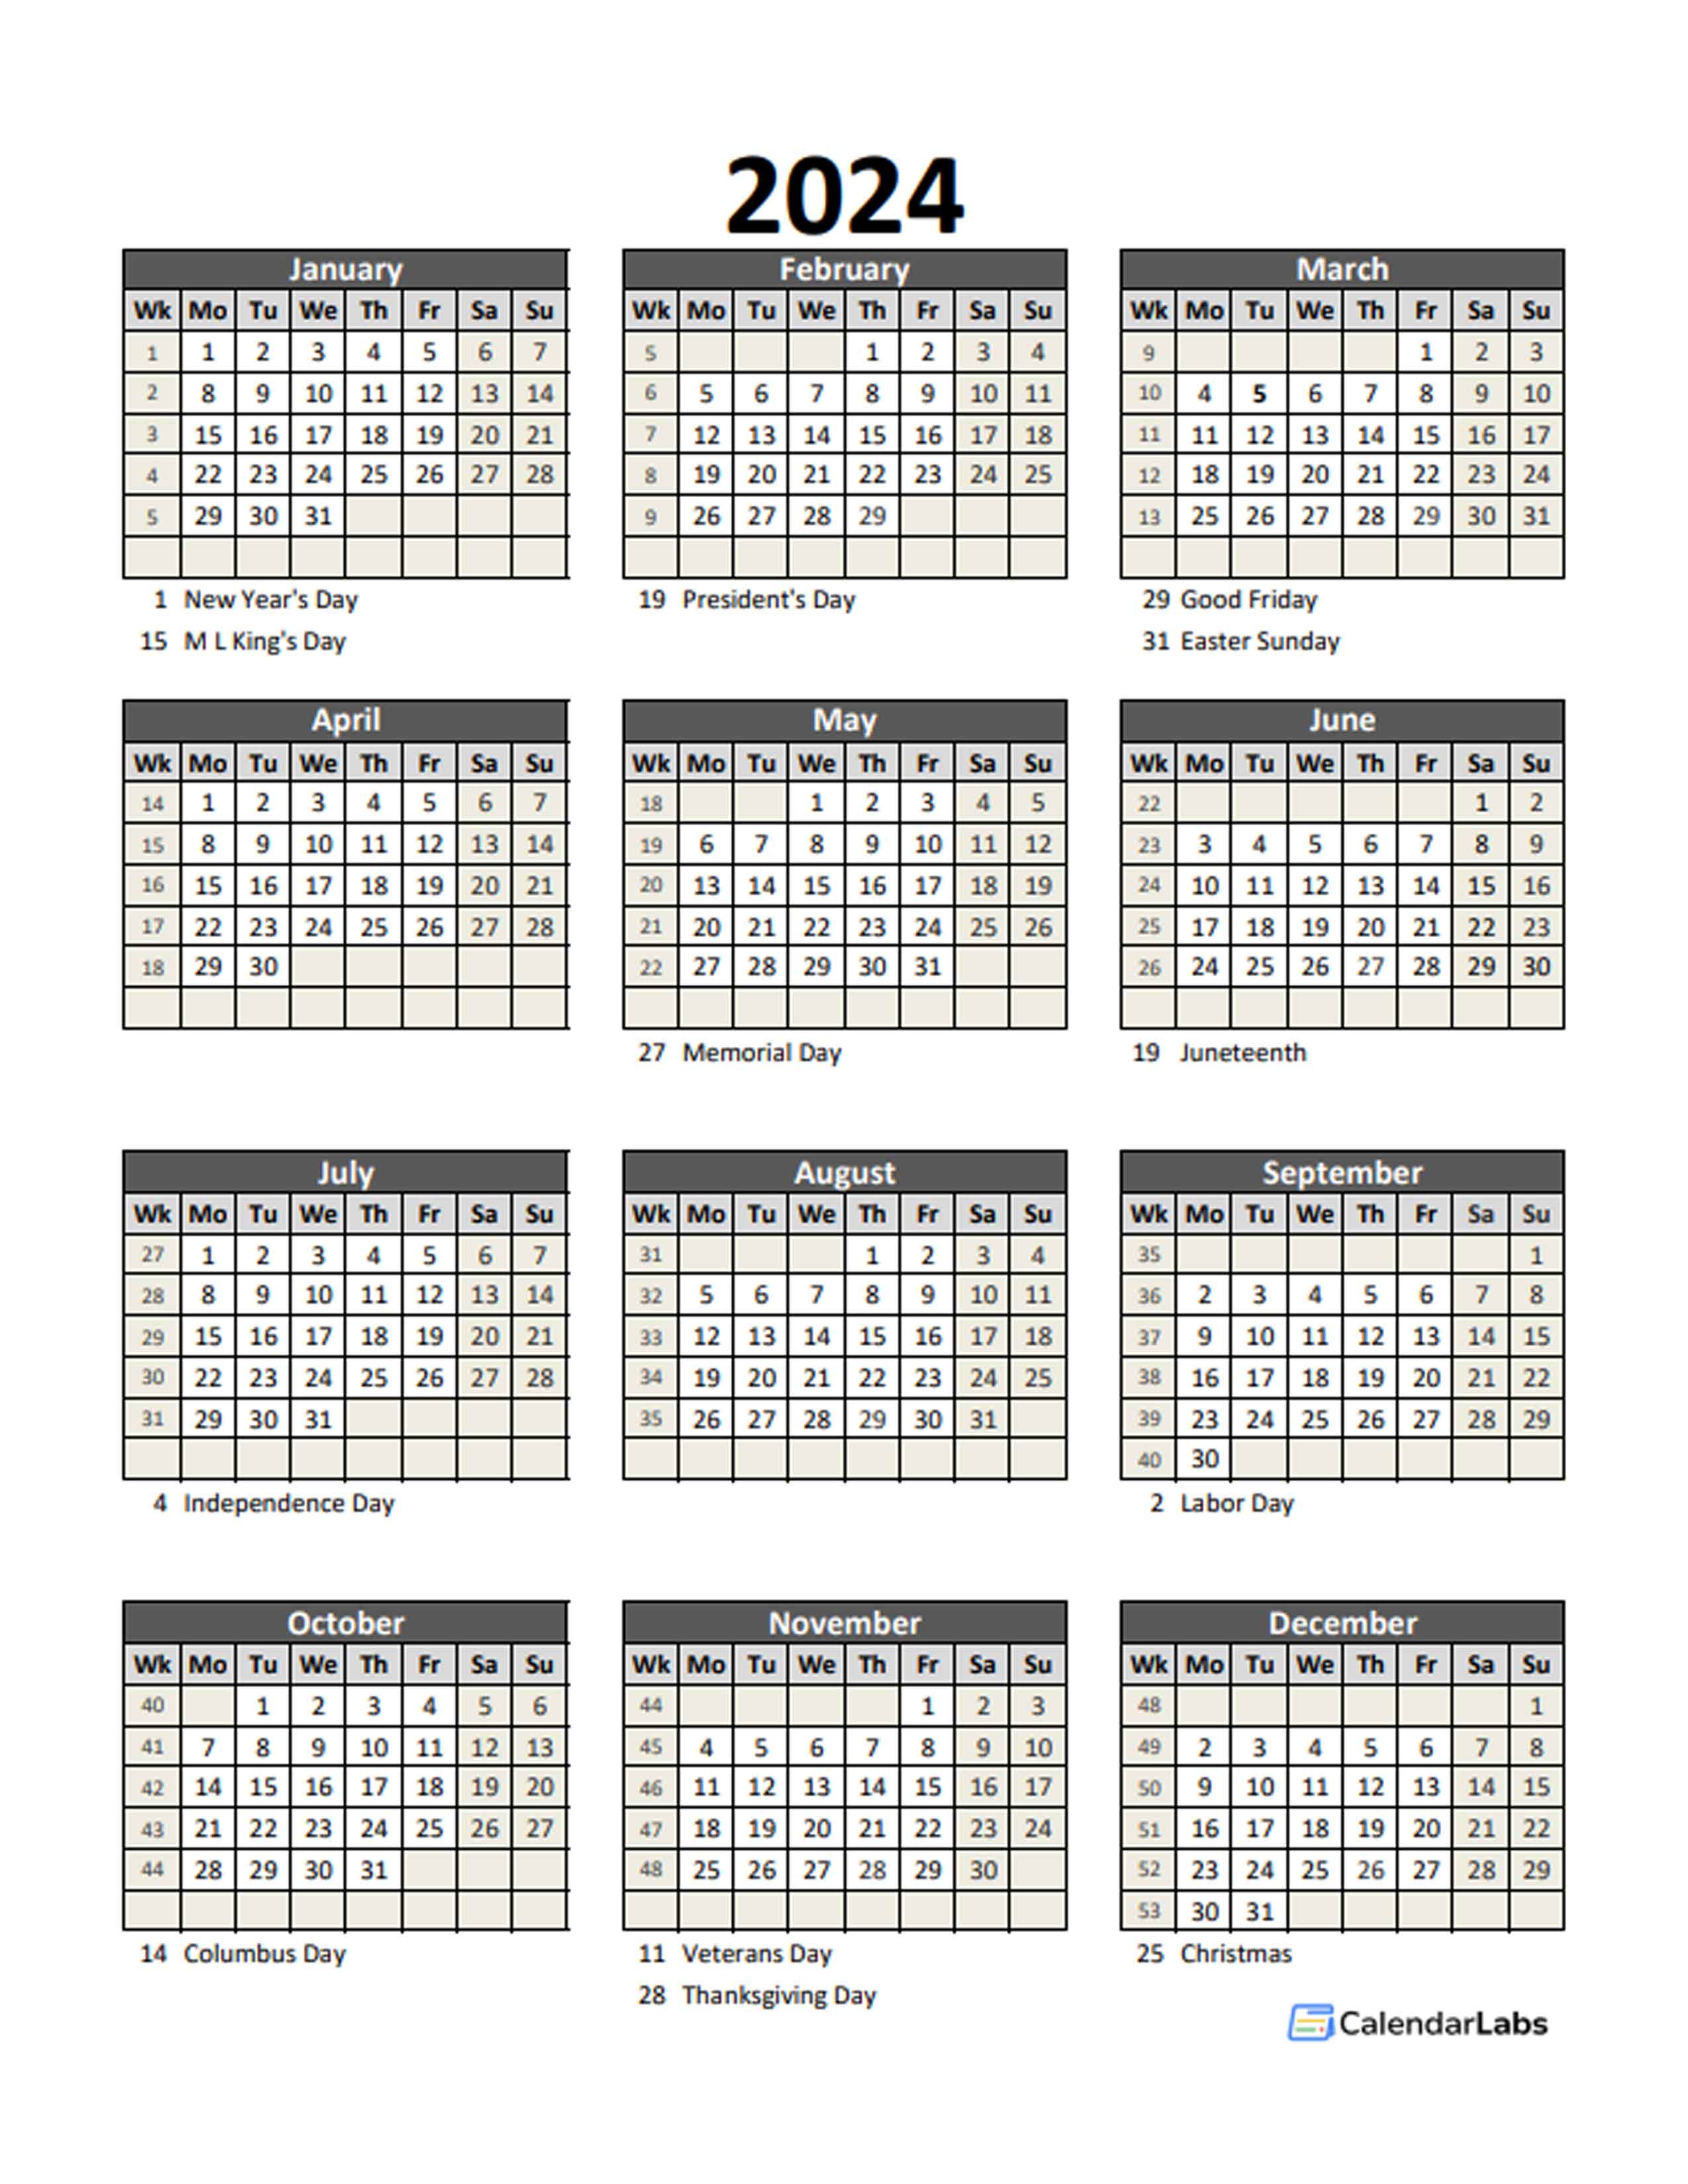 2024 Biweekly Payroll Calendar Template Excel Free Editable Sydel